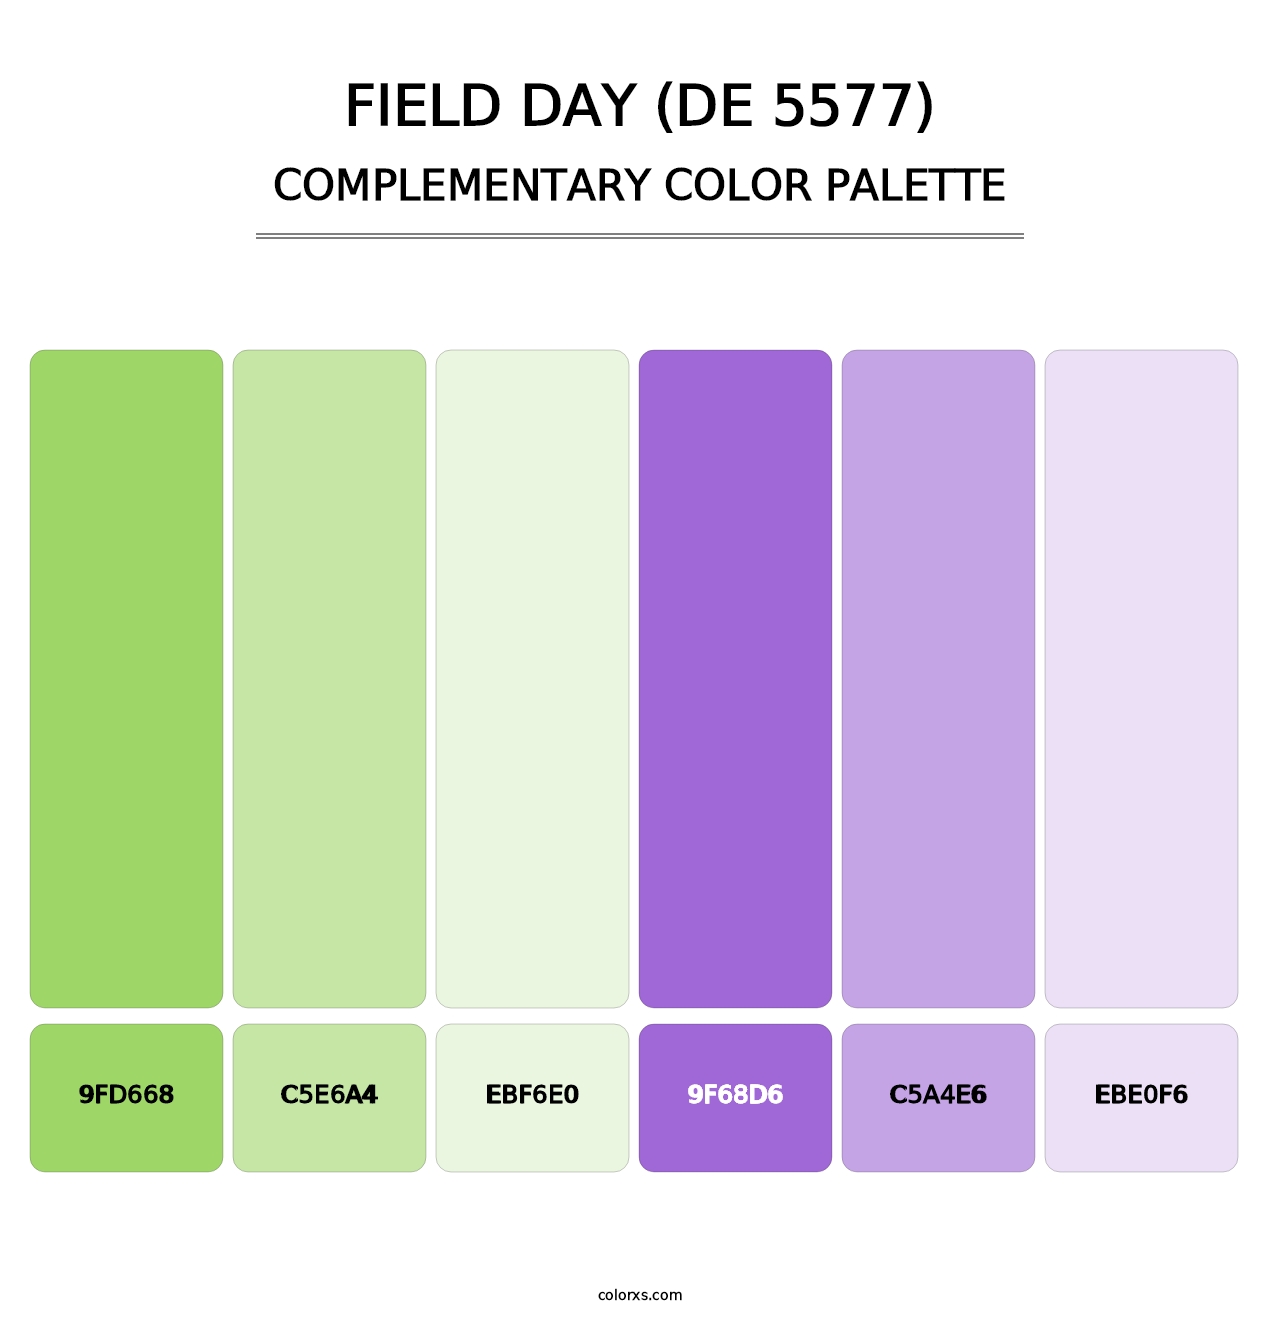 Field Day (DE 5577) - Complementary Color Palette